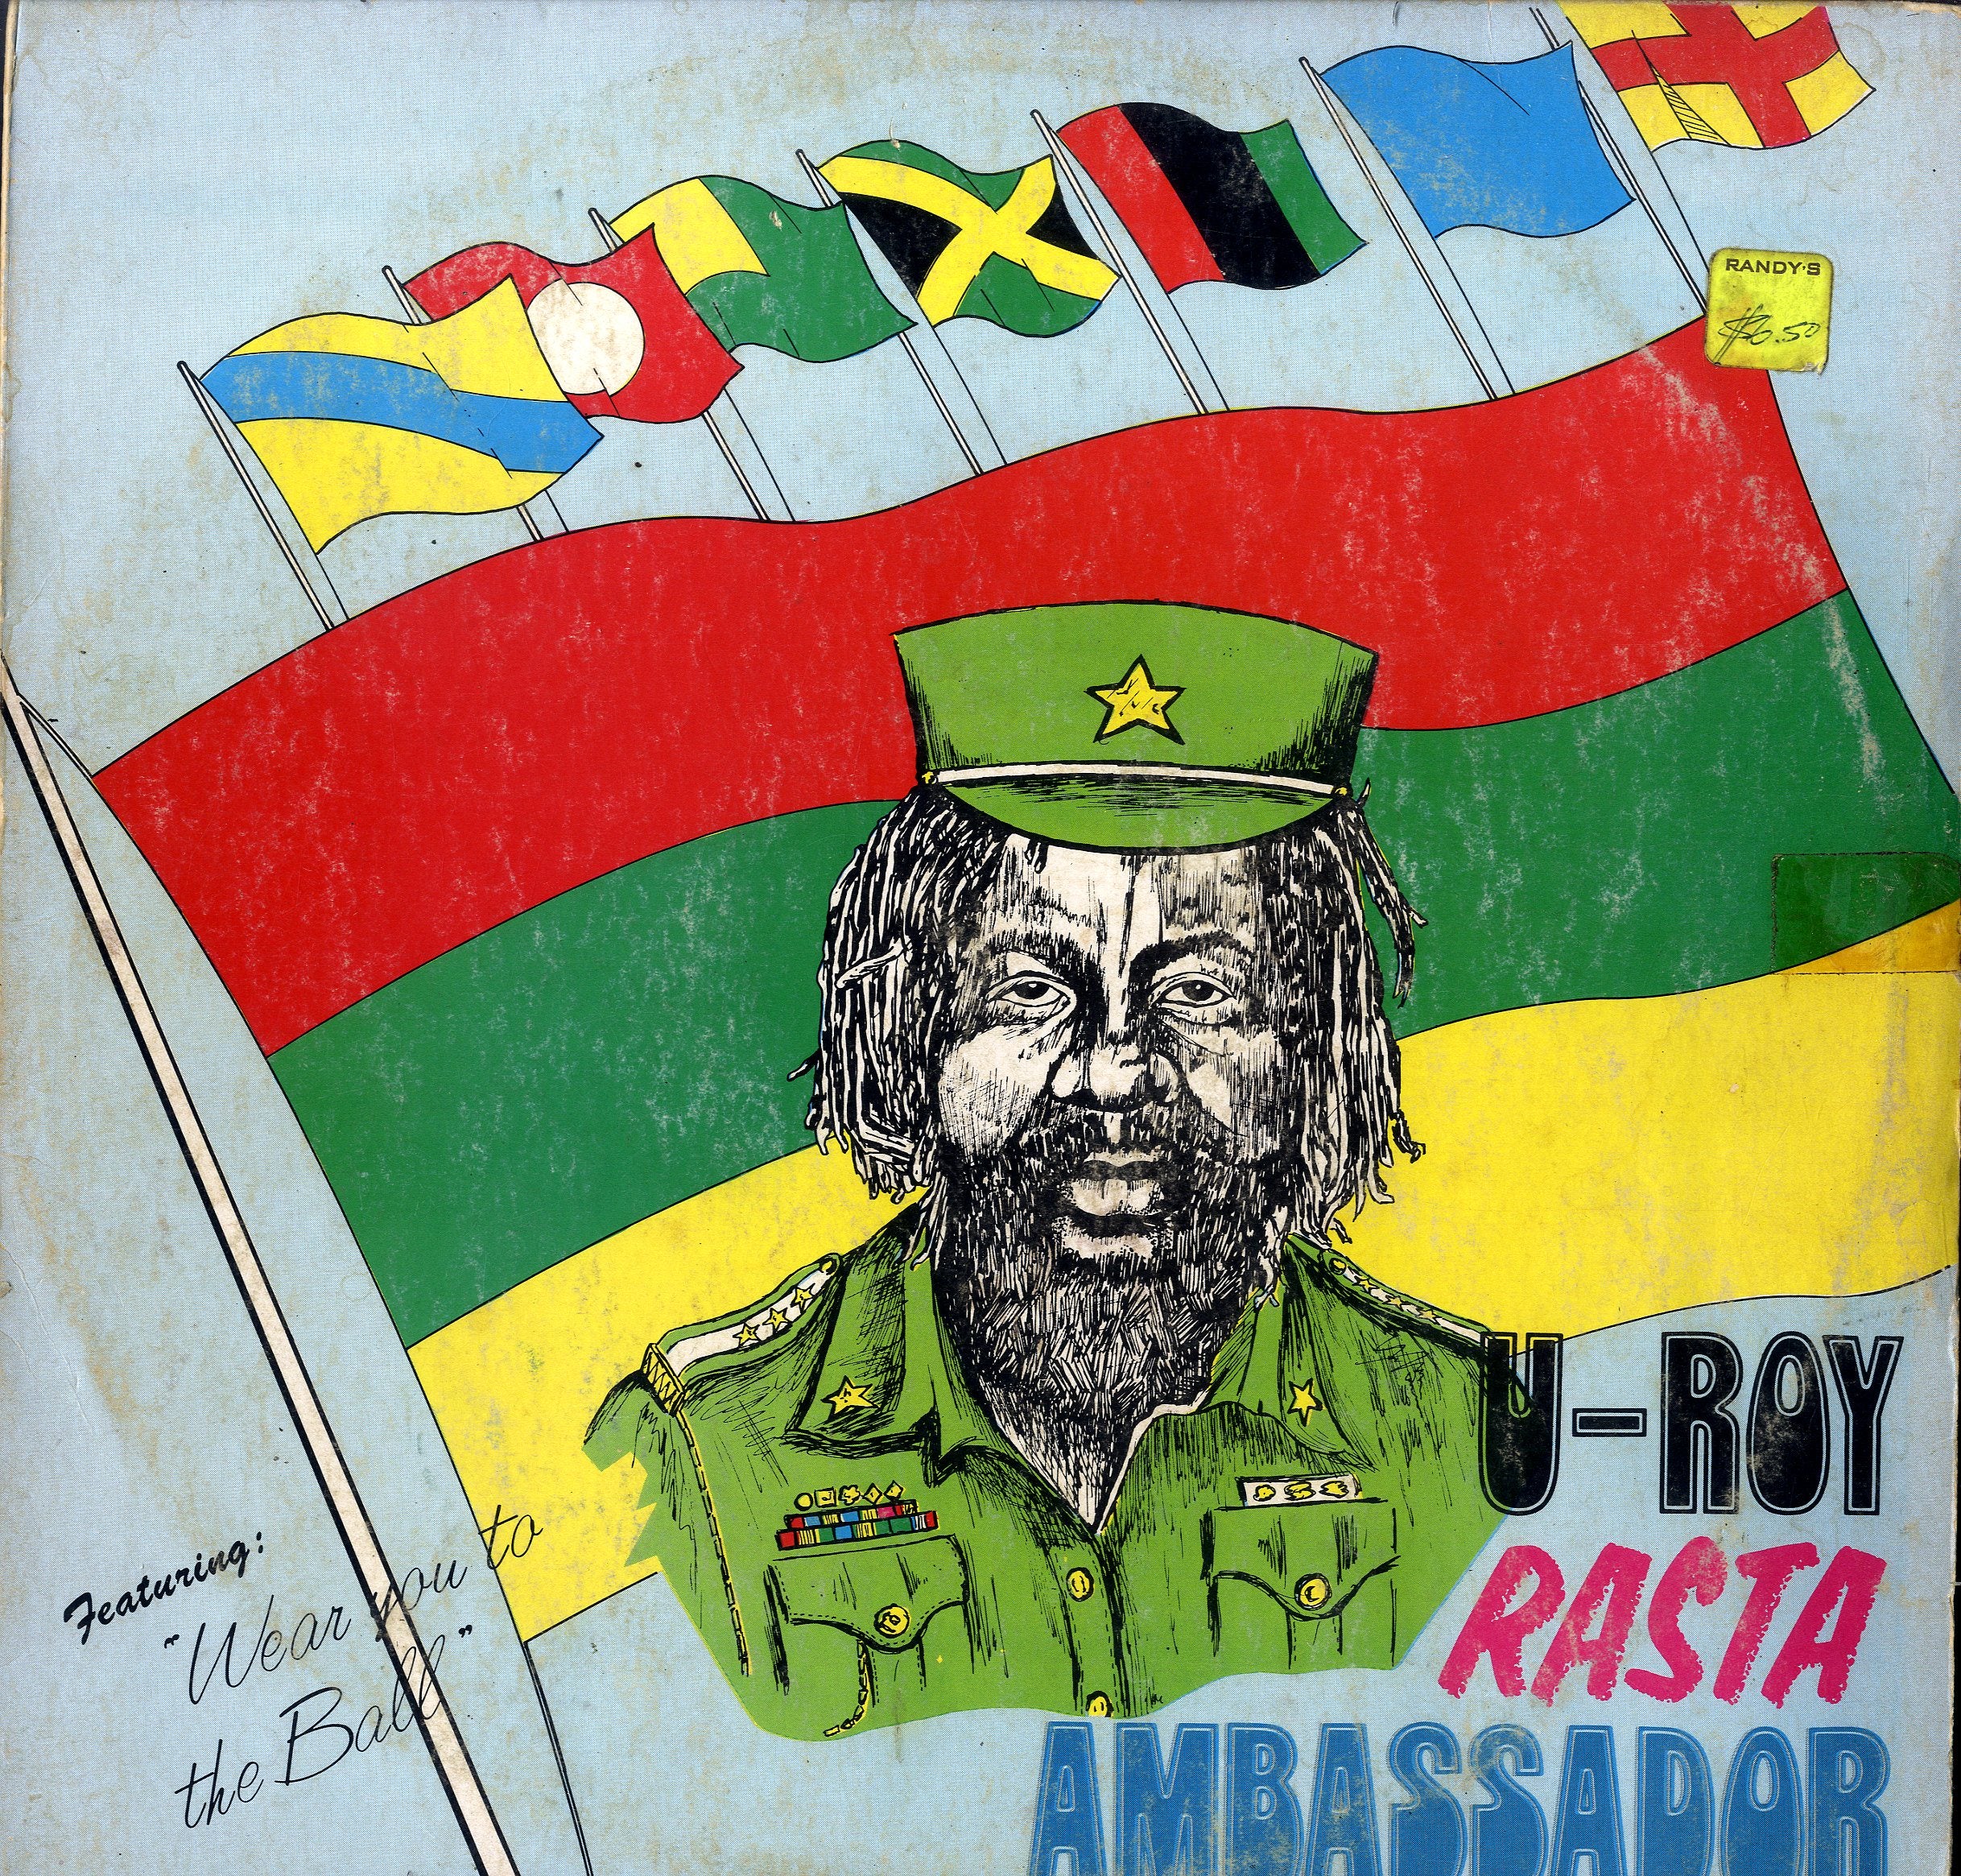 U - ROY [Rasta Ambassador]